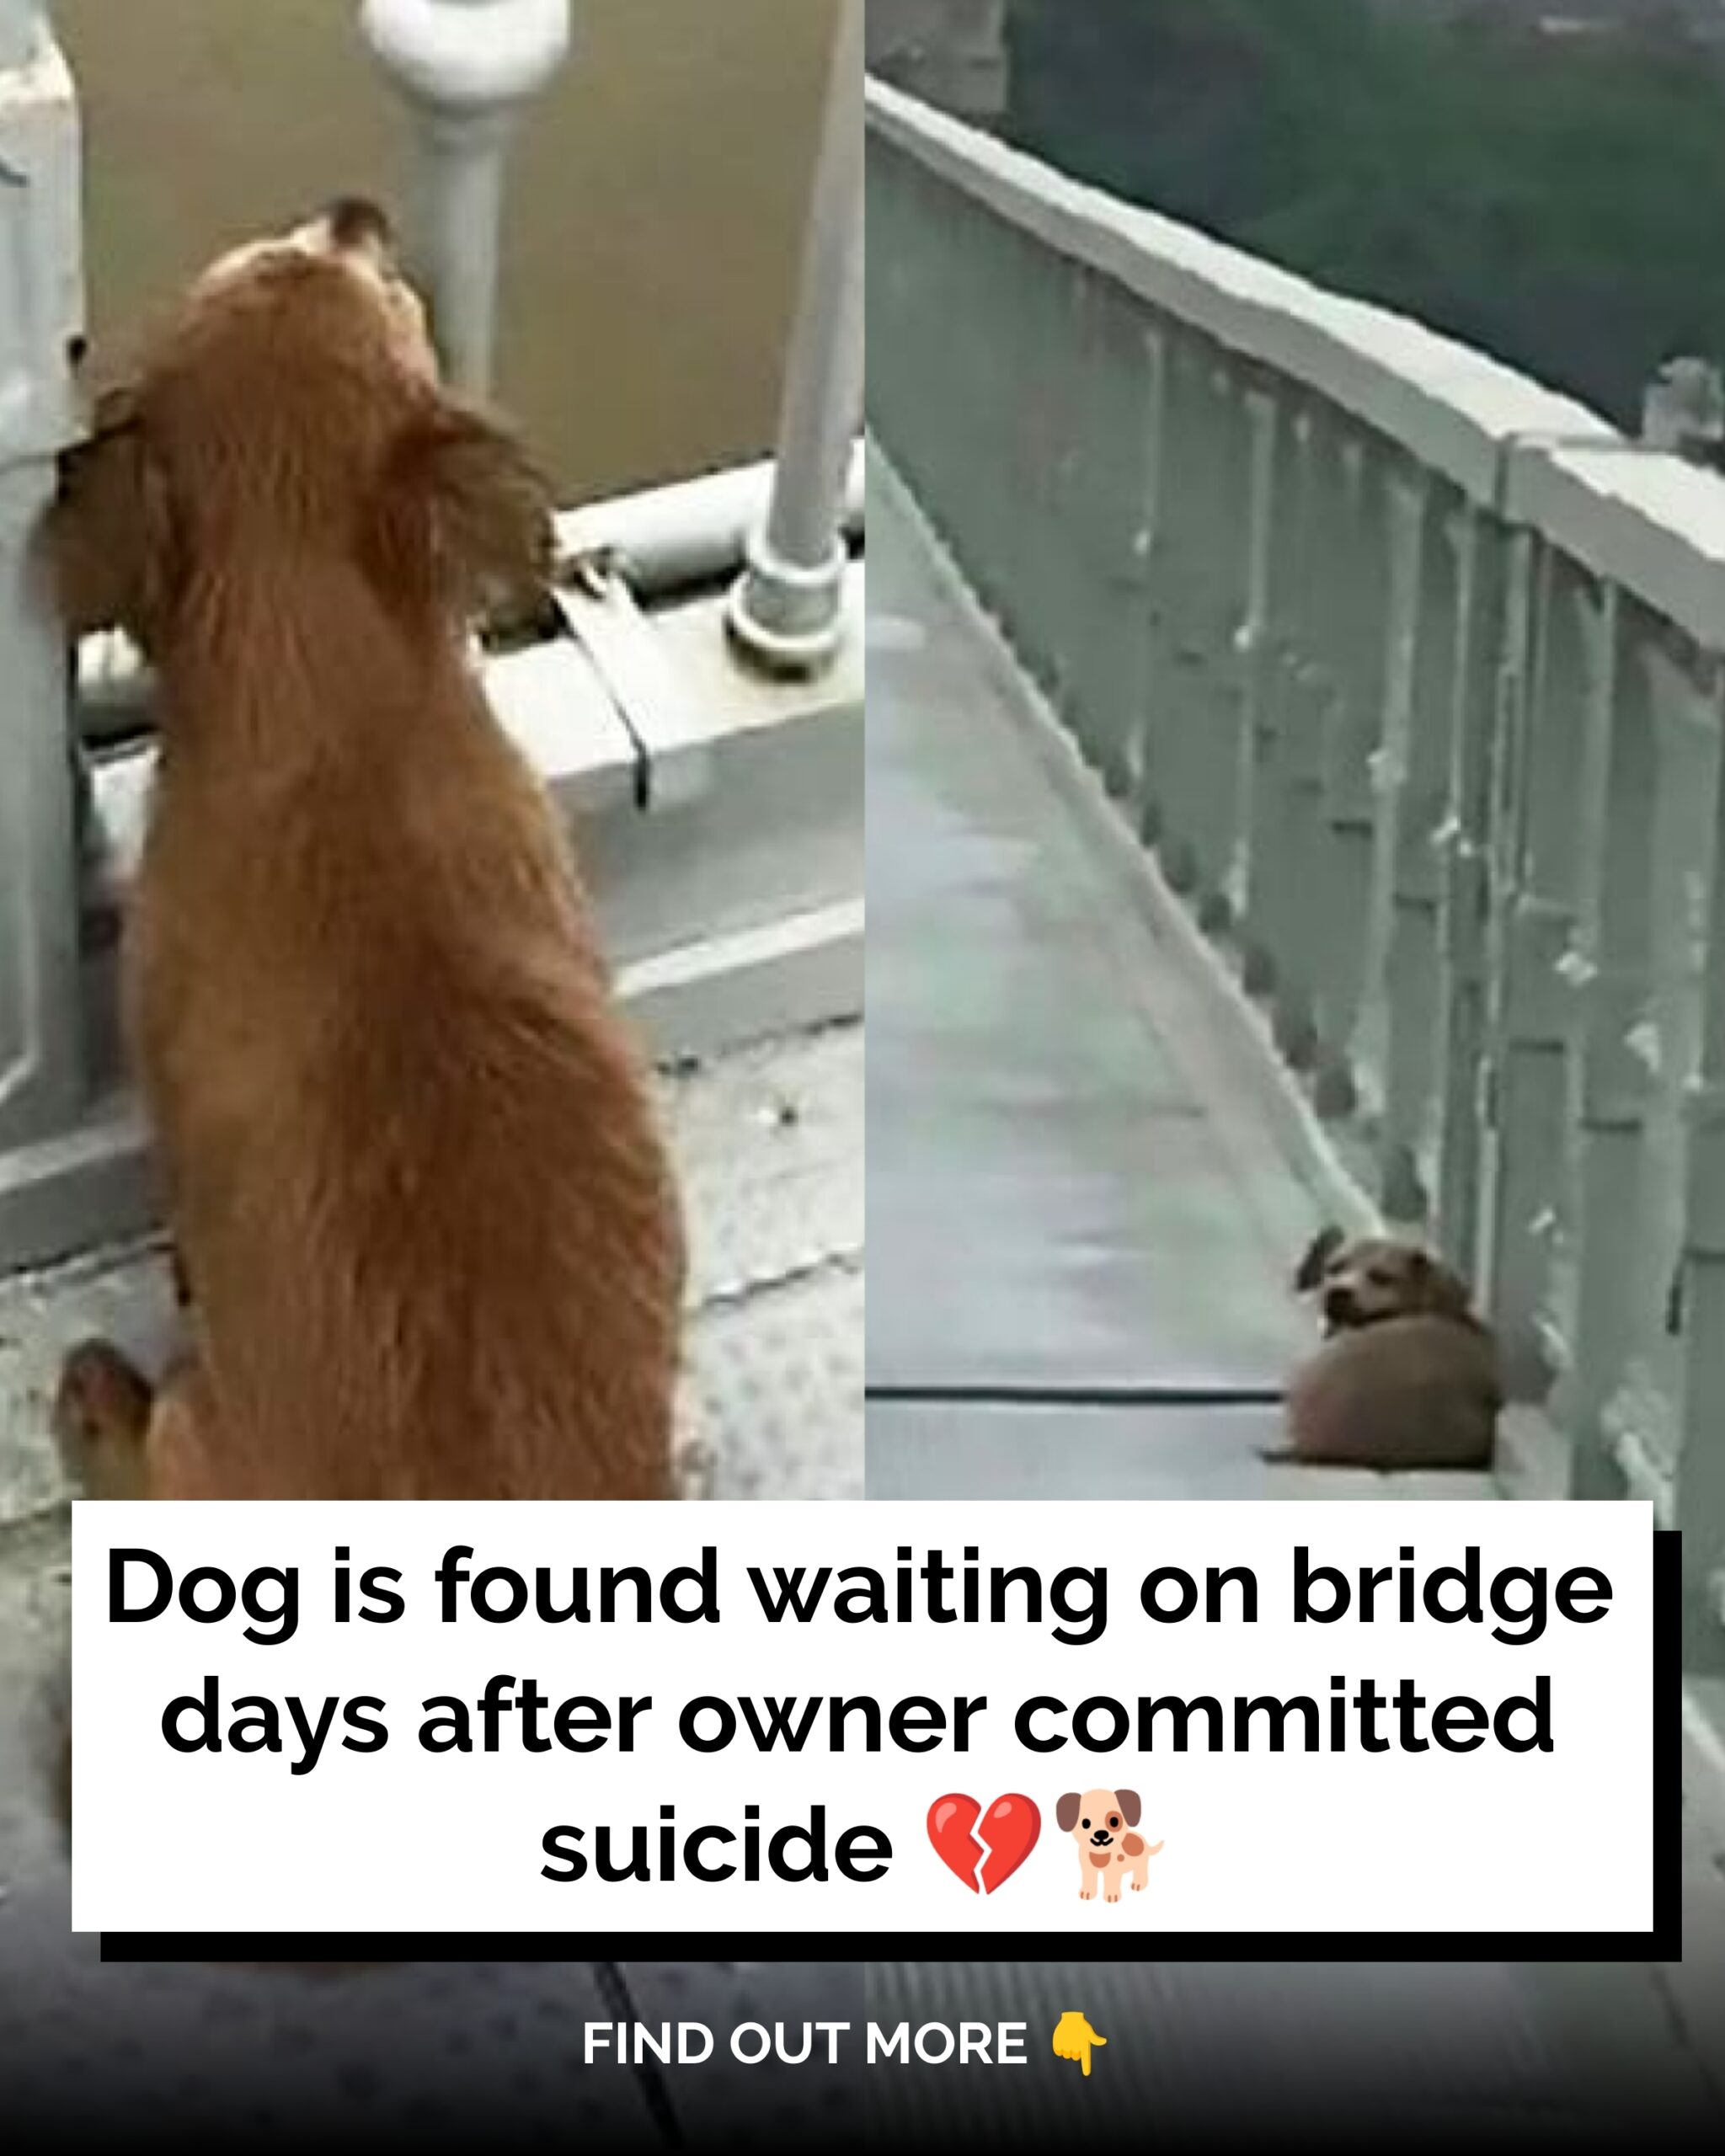 Dog Found Waiting on Bridge Days After Owner’s Tragic Death